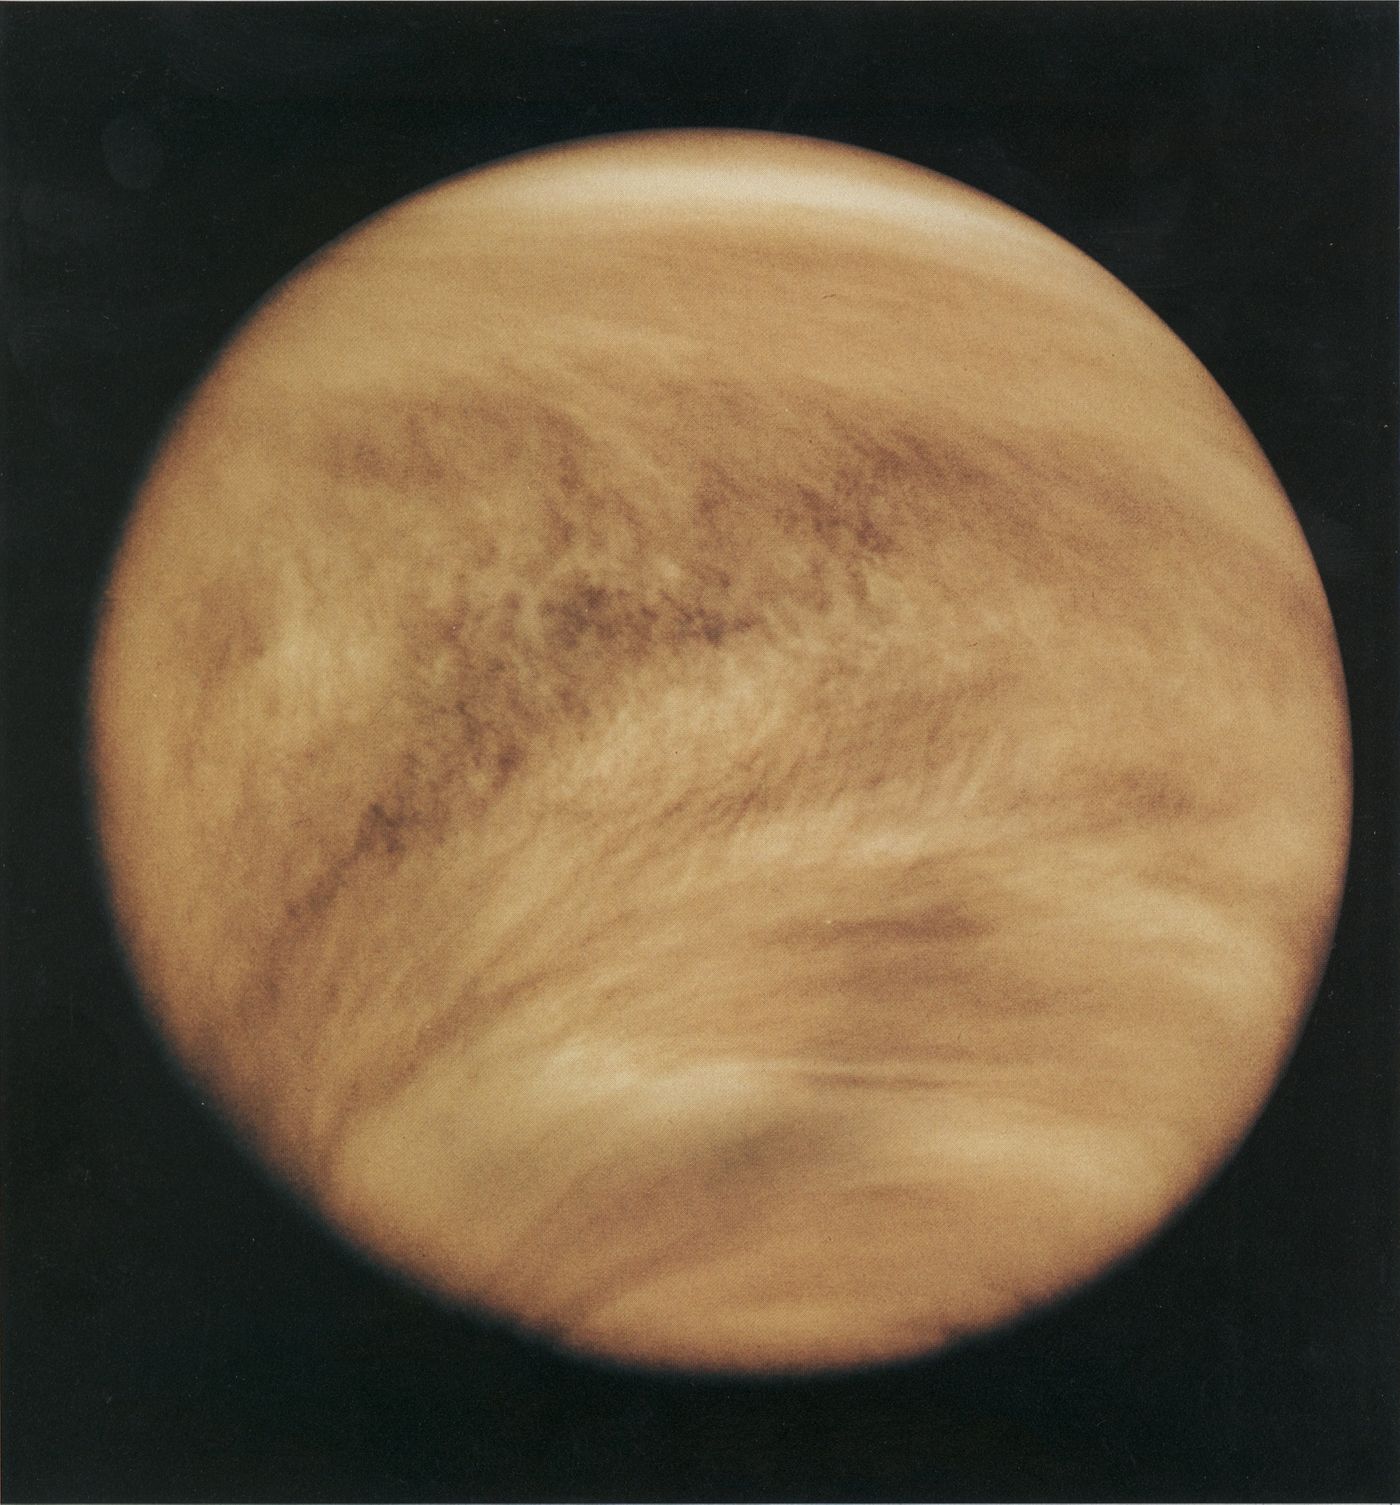 Venus as photographed by the Pioneer spacecraft.